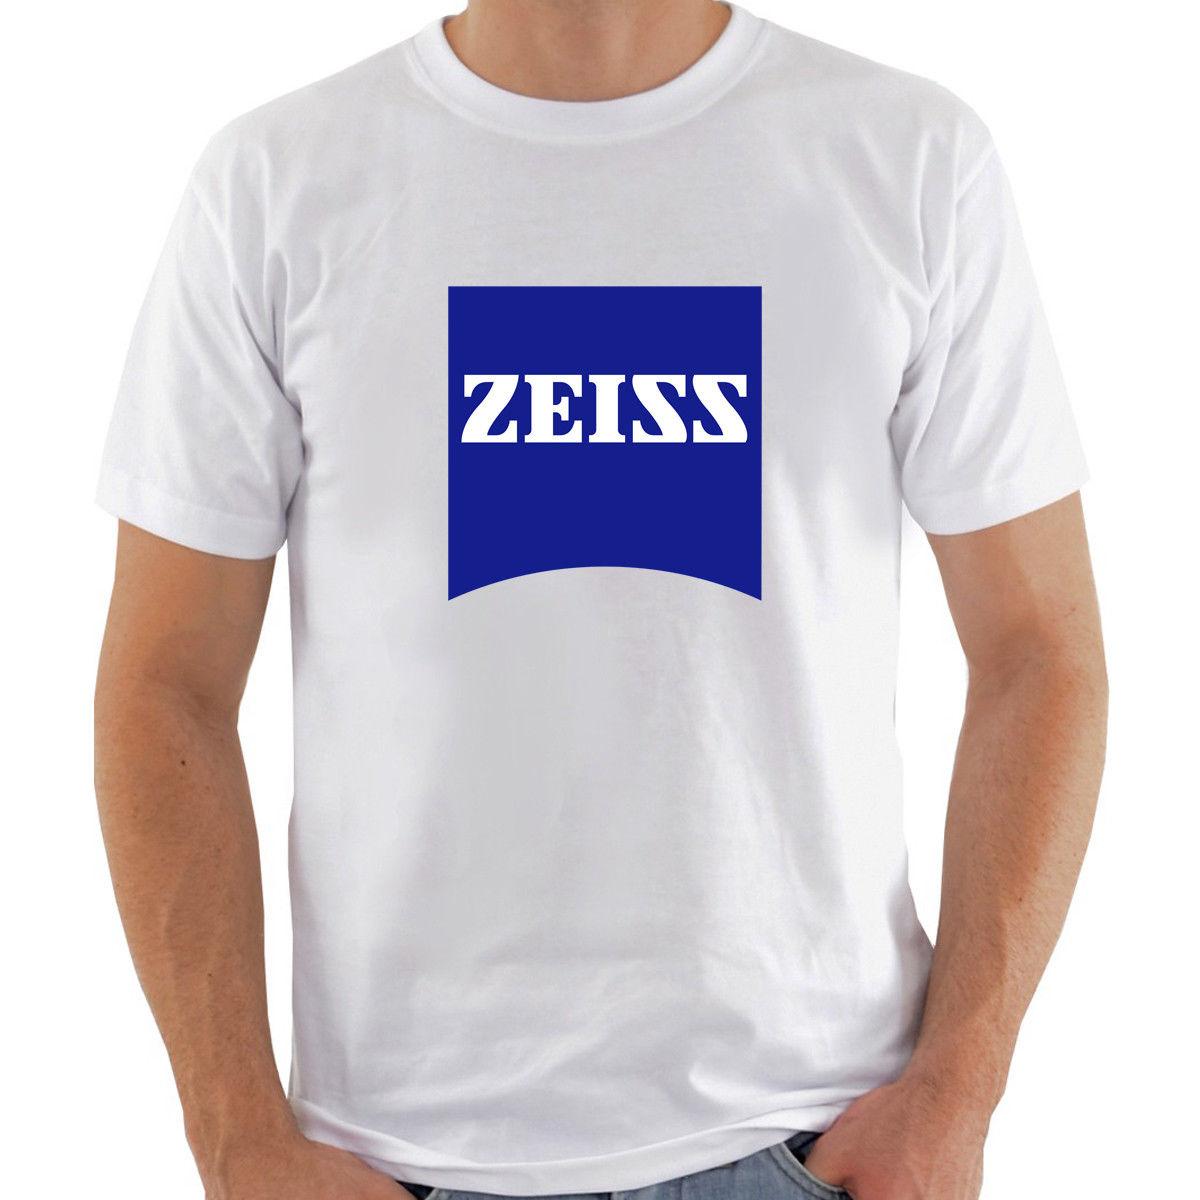 Zeiss Logo - ZEISS LOGO OPTICAL TECHNOLOGY men white t-shirt 100% cotton graphic tee  2018 New Men T-Shirts Fashion 2018 New Men tee